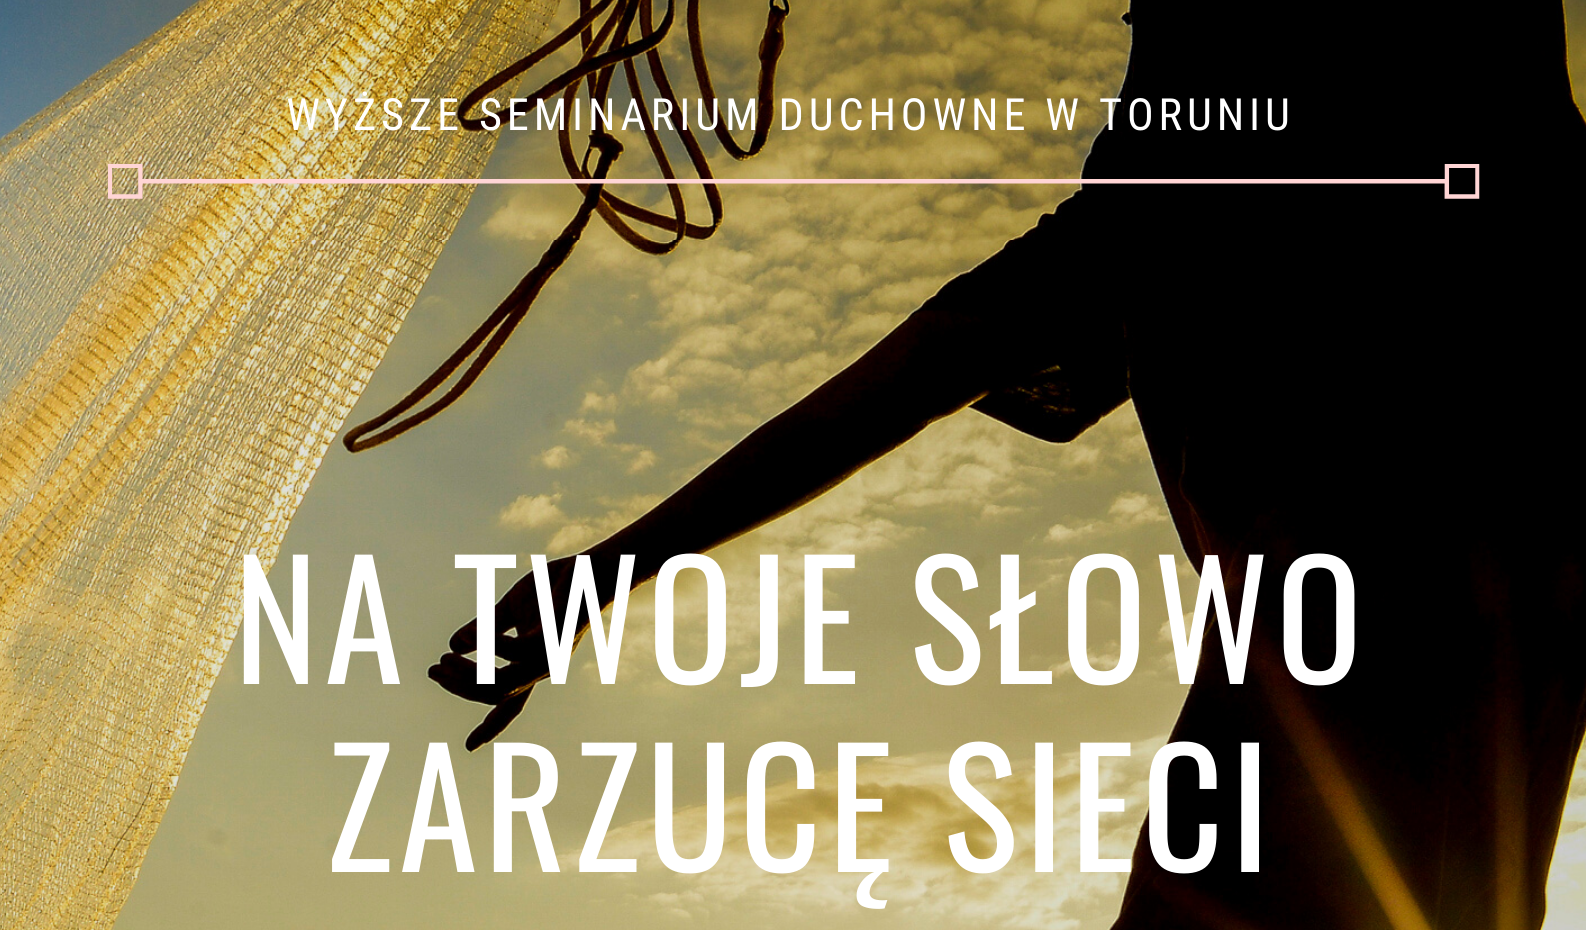 You are currently viewing Rekrutacja do Wyższego Seminarium Duchownego w Toruniu